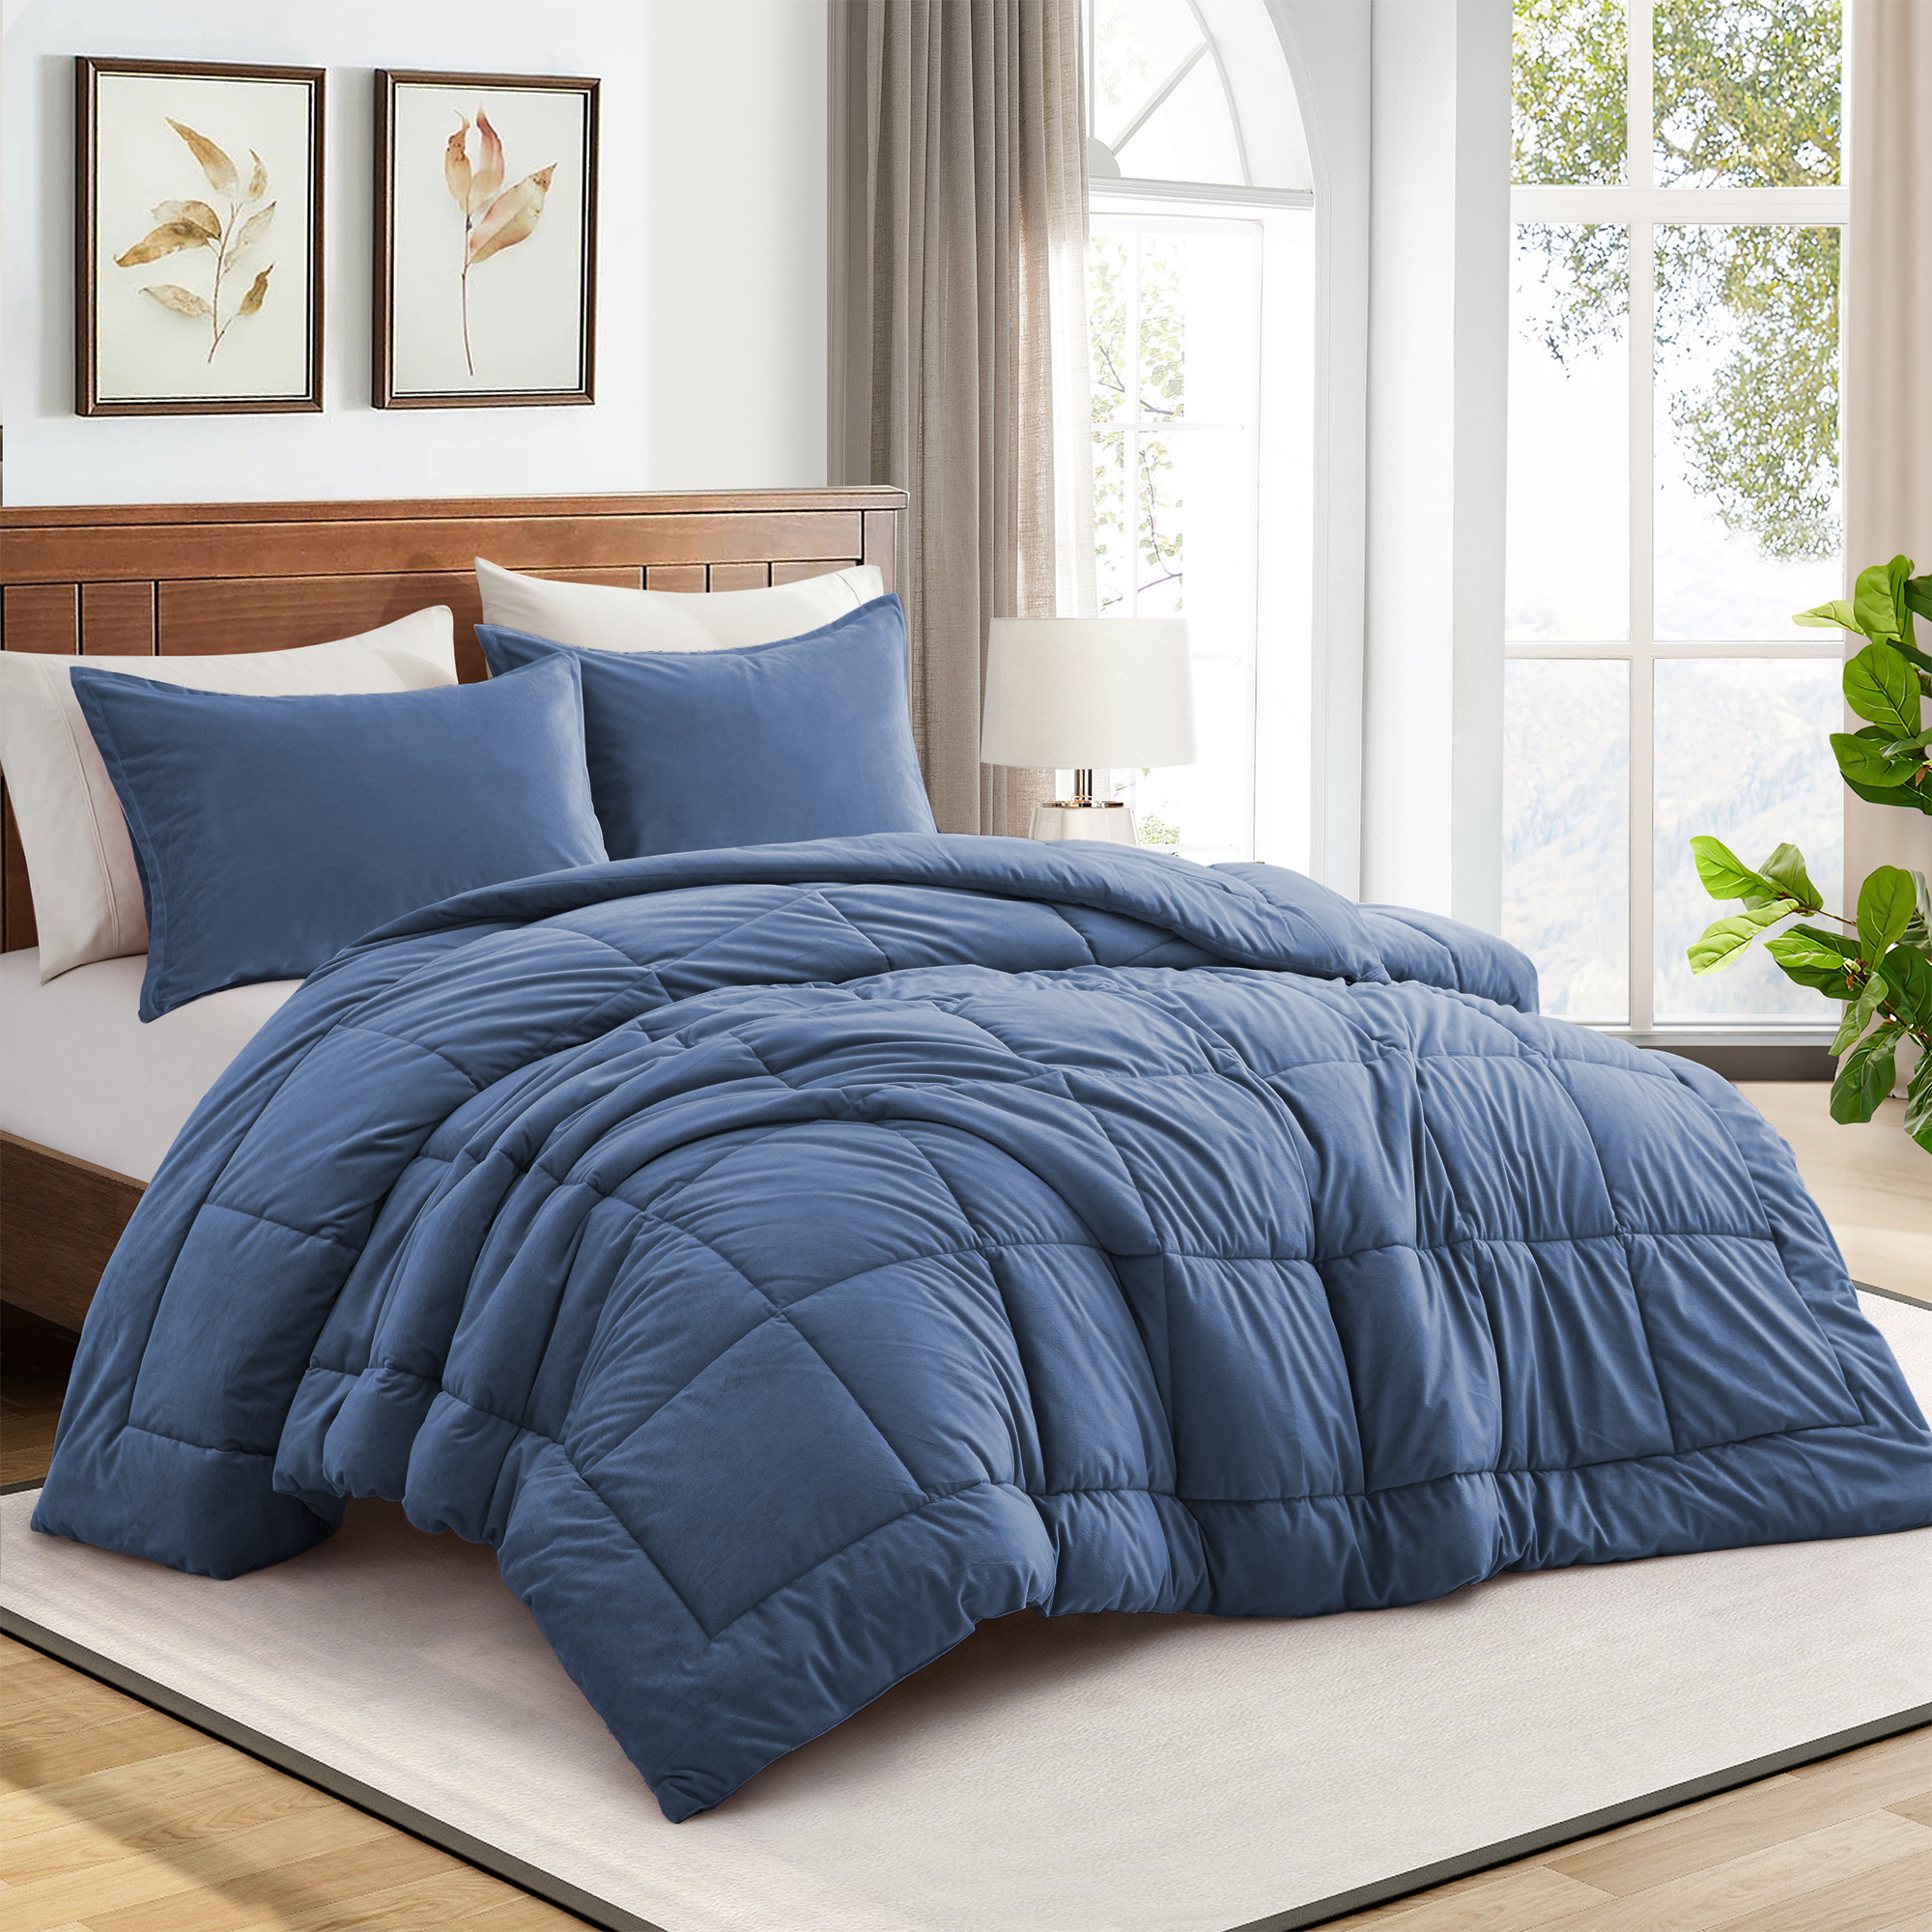 2 Or 3 Pieces Luxury Ultra Soft Velvet Solid Duvet Set-All Season Reversible Down Alternative Comforter Set - King Size